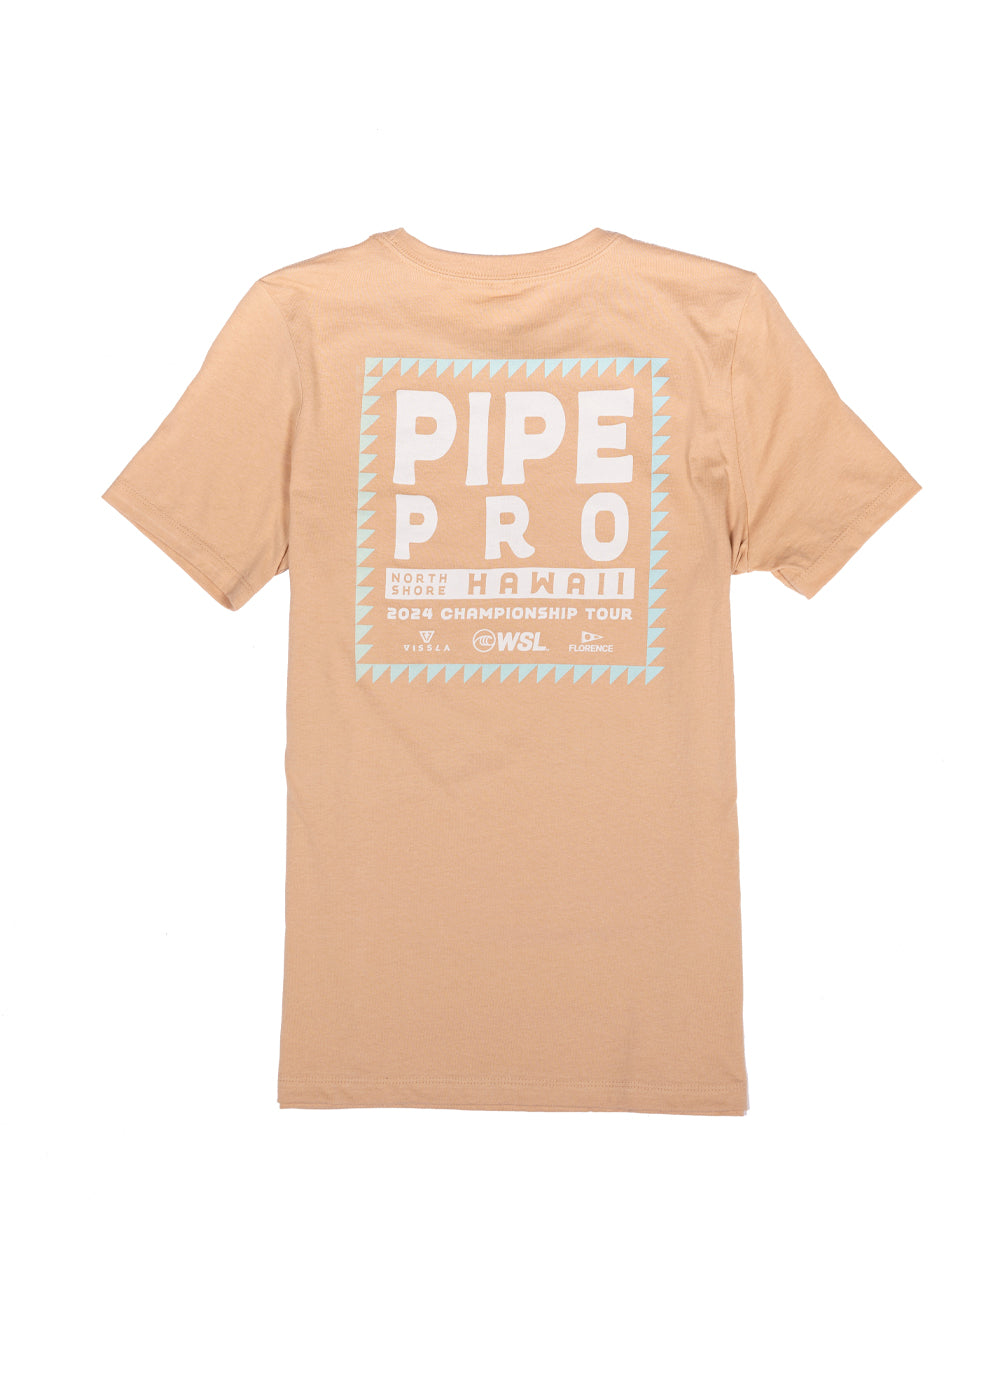 Pipe Pro Stamp Women's S/S Tee